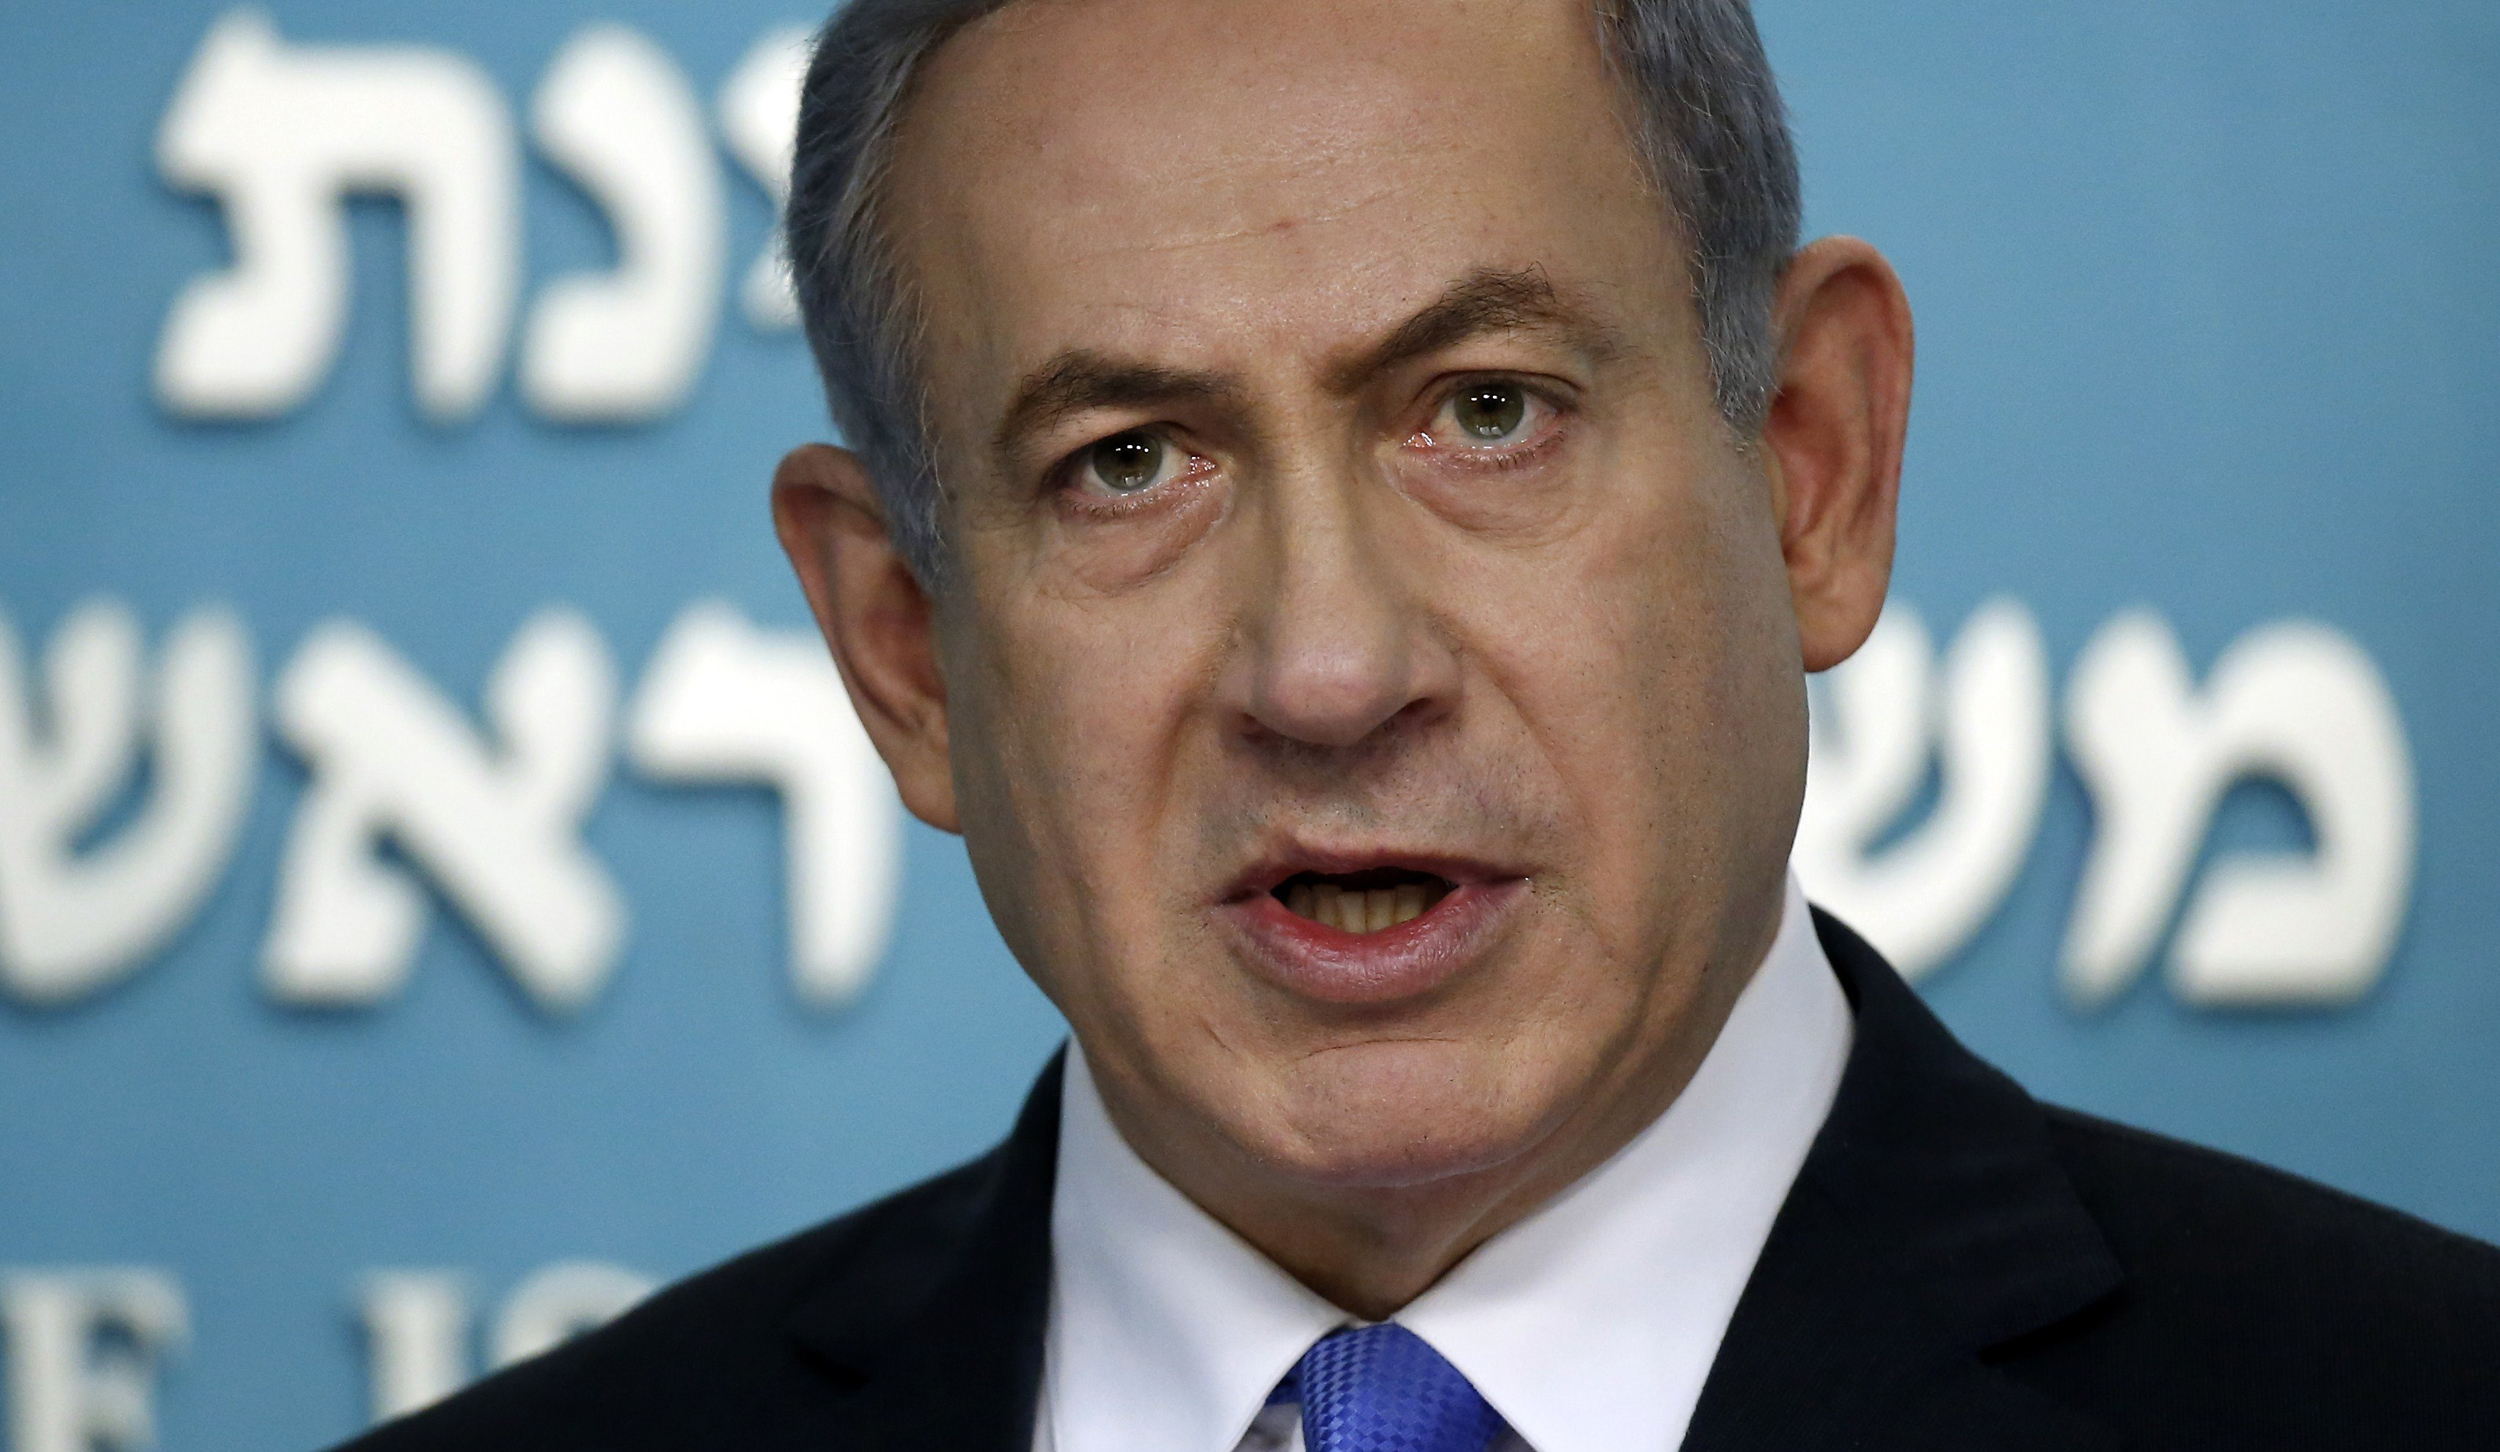 Benjamin Netanyahu, Israeli PM, 70 - Ramblin' with Roger